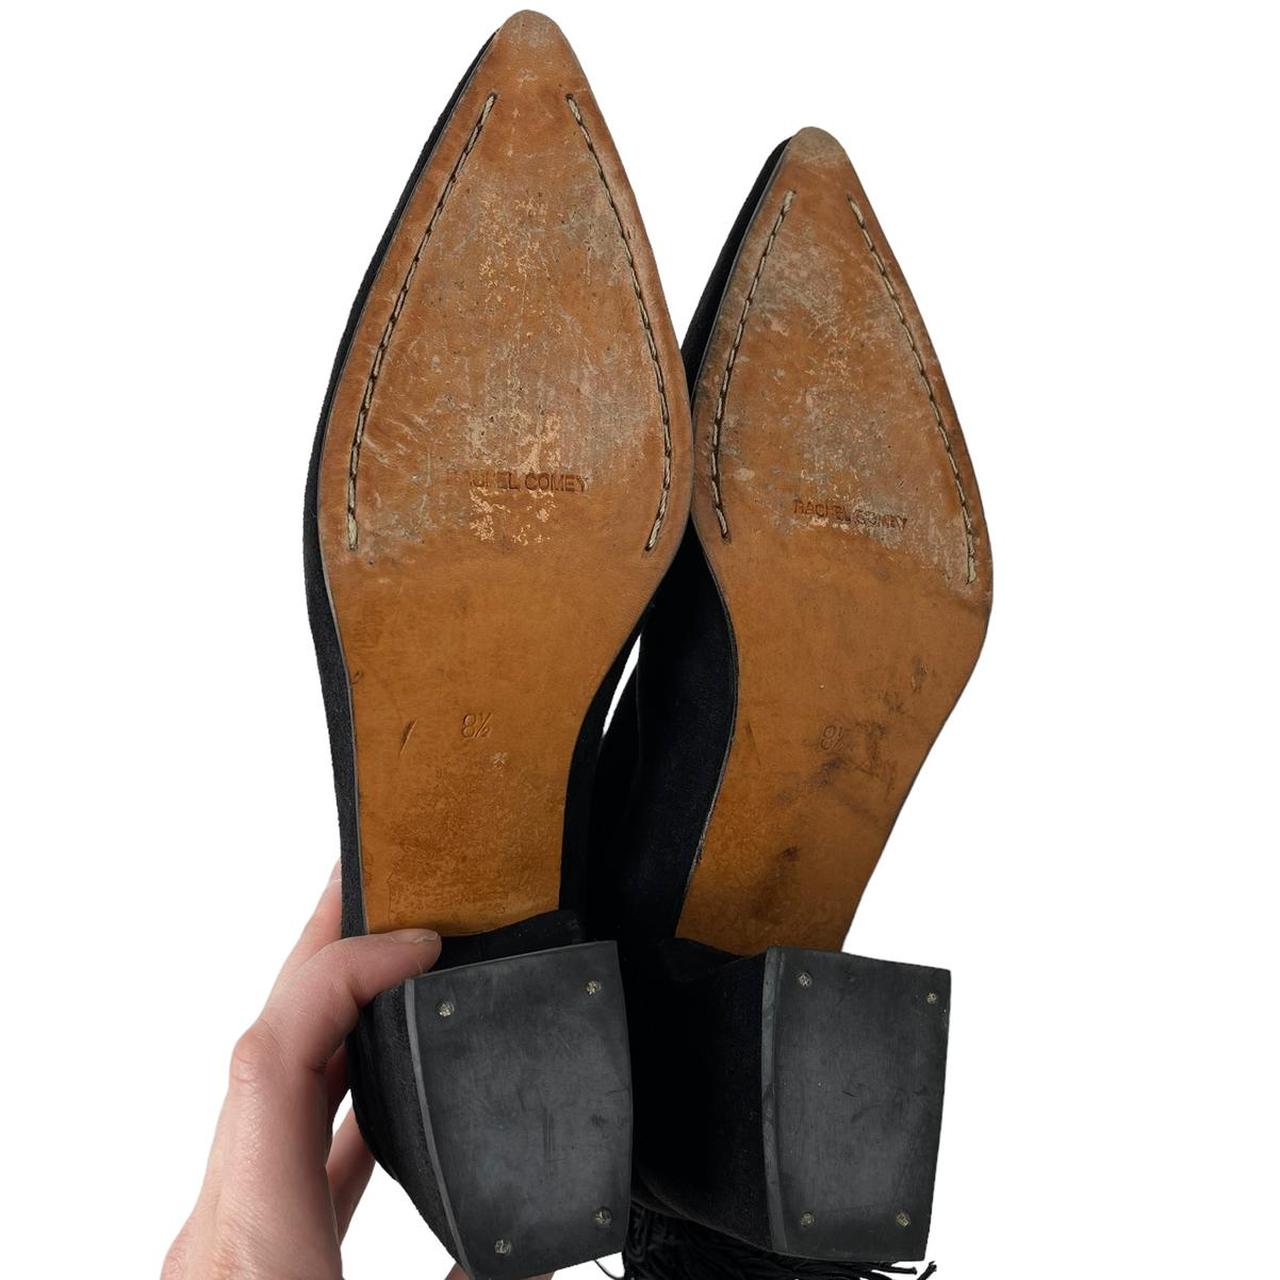 Rachel Comey Women's Black Boots (4)